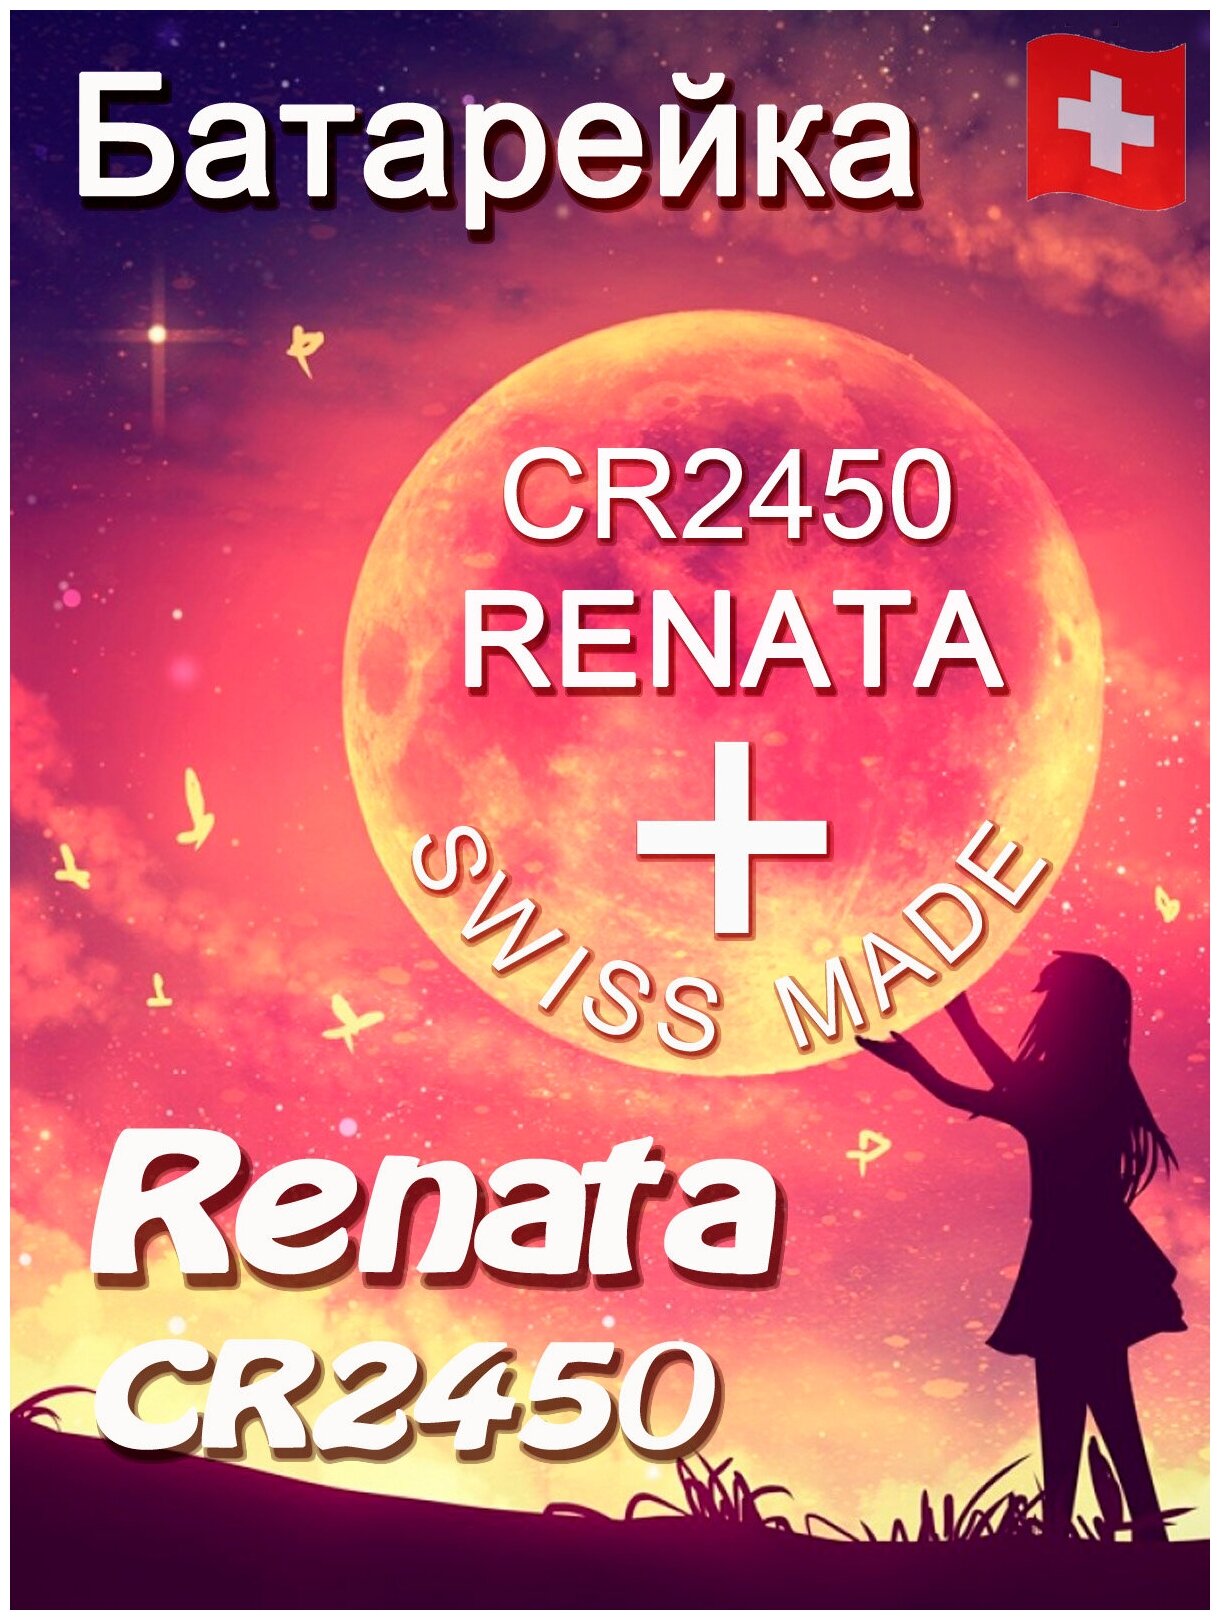 Батарейка Renata CR2450 B1/Элемент питания рената CR2450 B1(1шт)